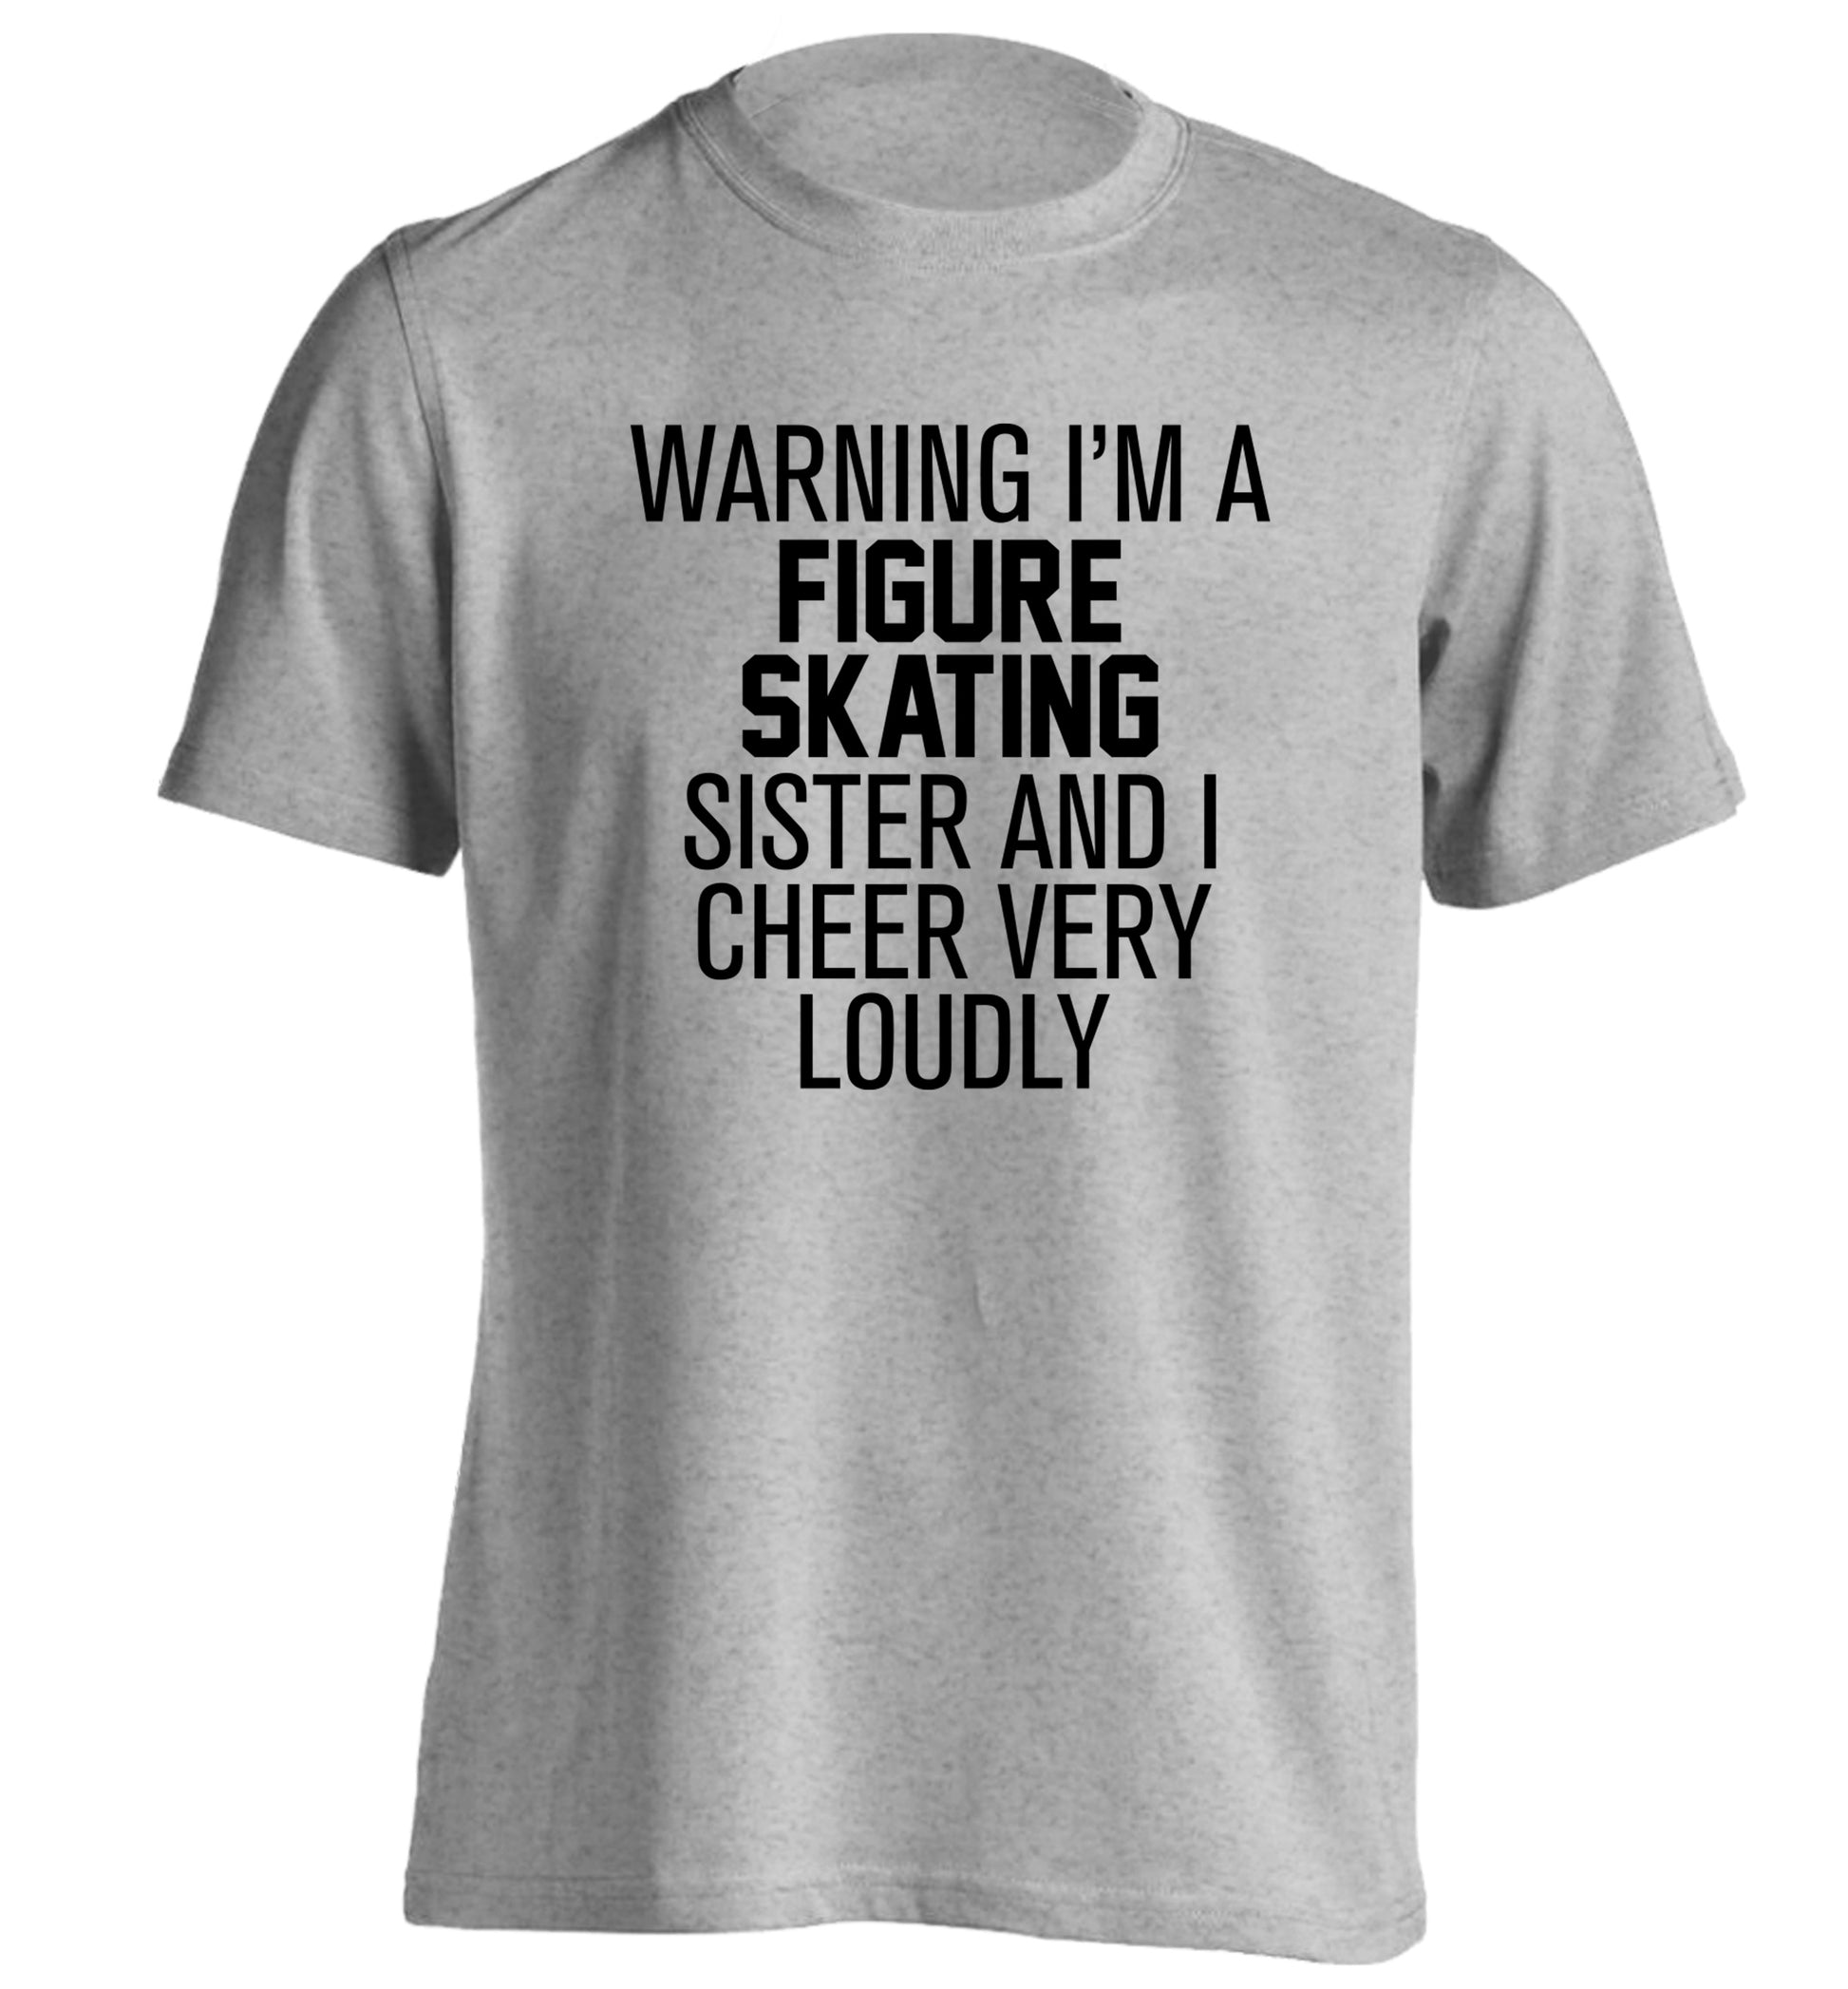 Warning I'm a figure skating sister and I cheer very loudly adults unisexgrey Tshirt 2XL